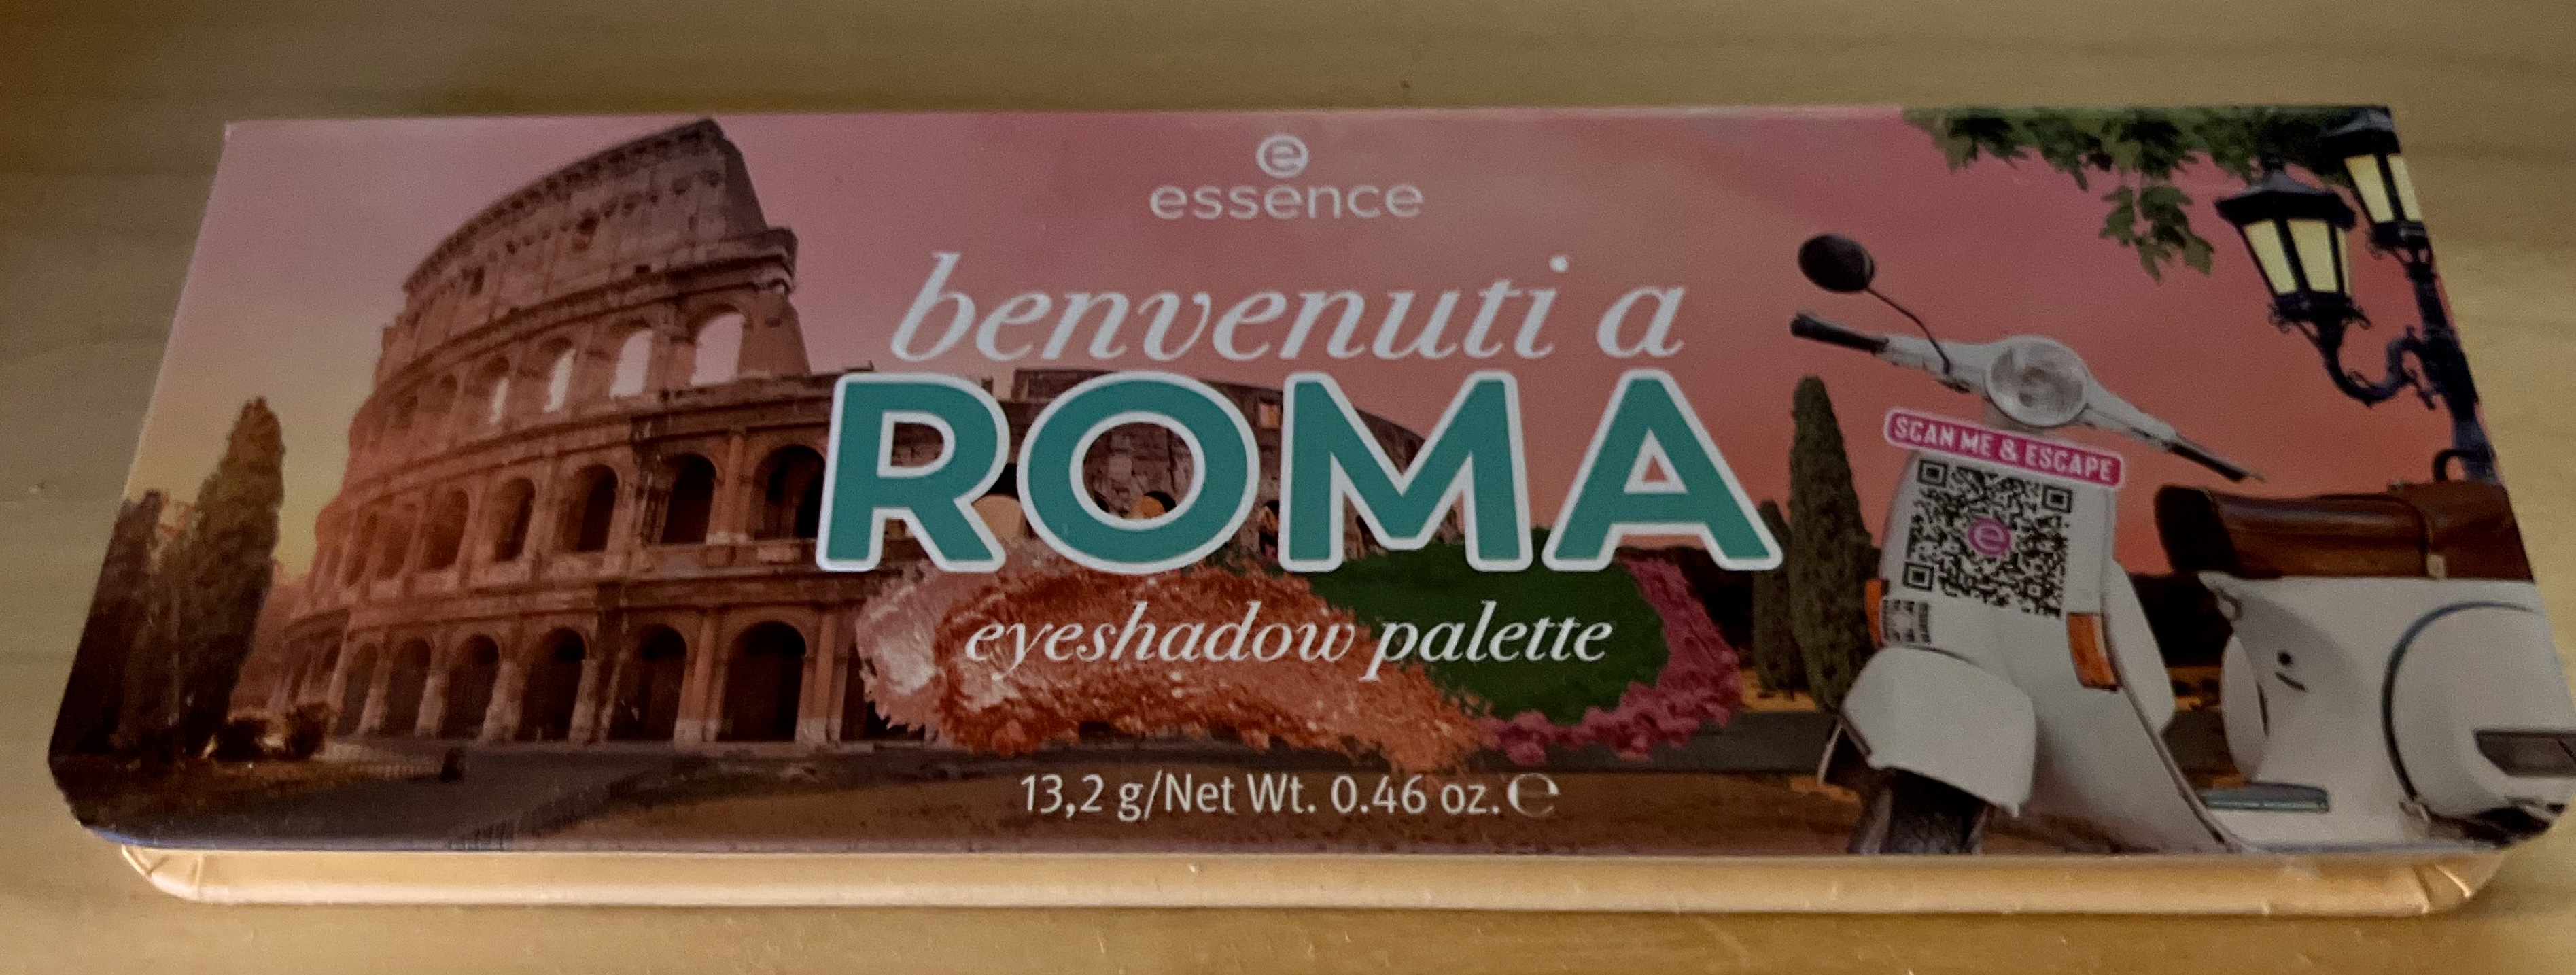 essence Benvenuti A 13 Palette Eyeshadow Roma g